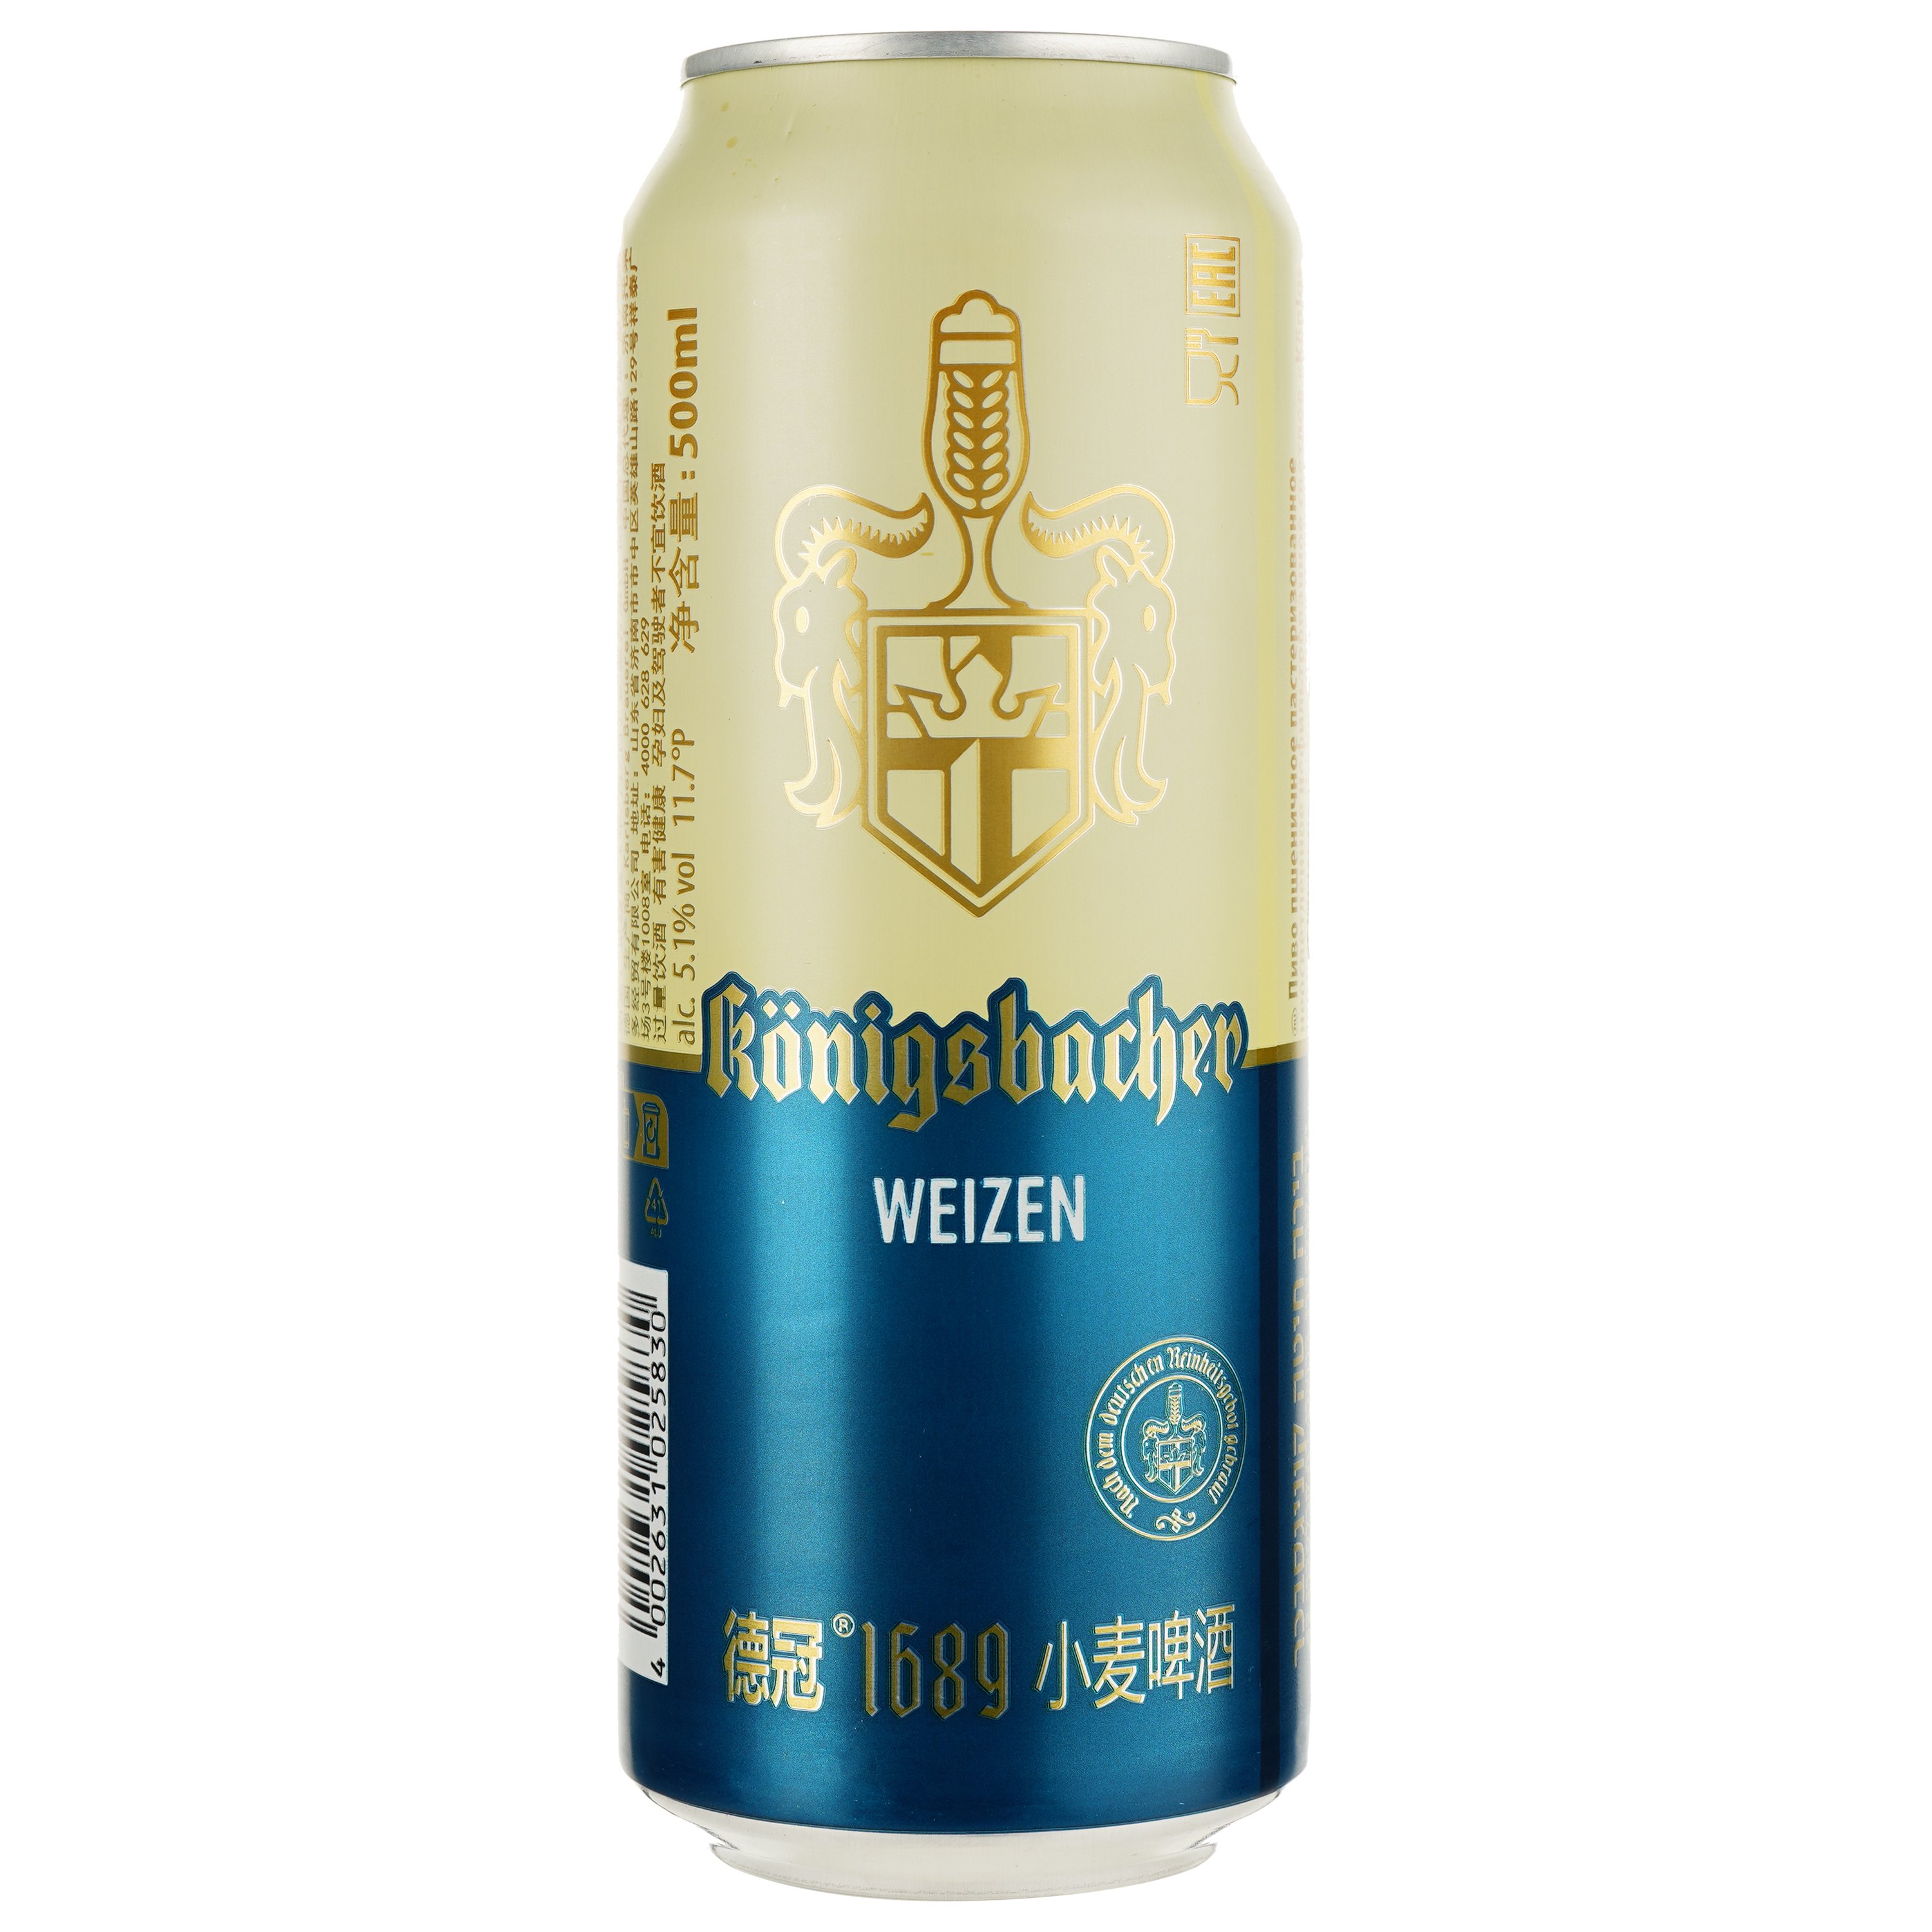 Пиво Konigsbacher Weizen светлое 5.1% 0.5 л ж/б - фото 1